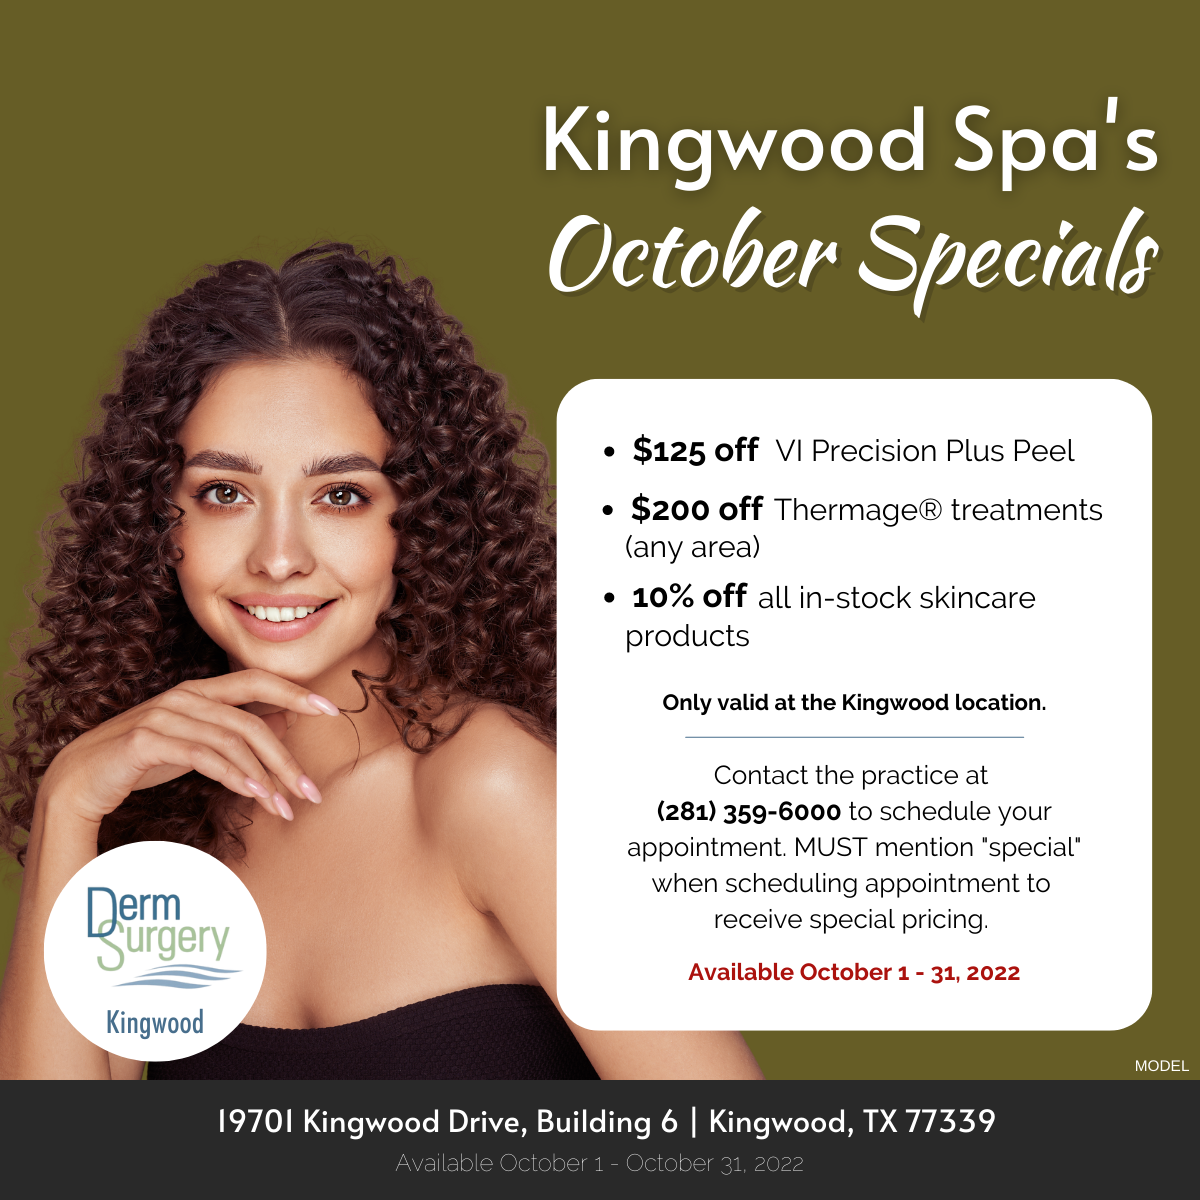 Kingwood Spa's October Specials 2022